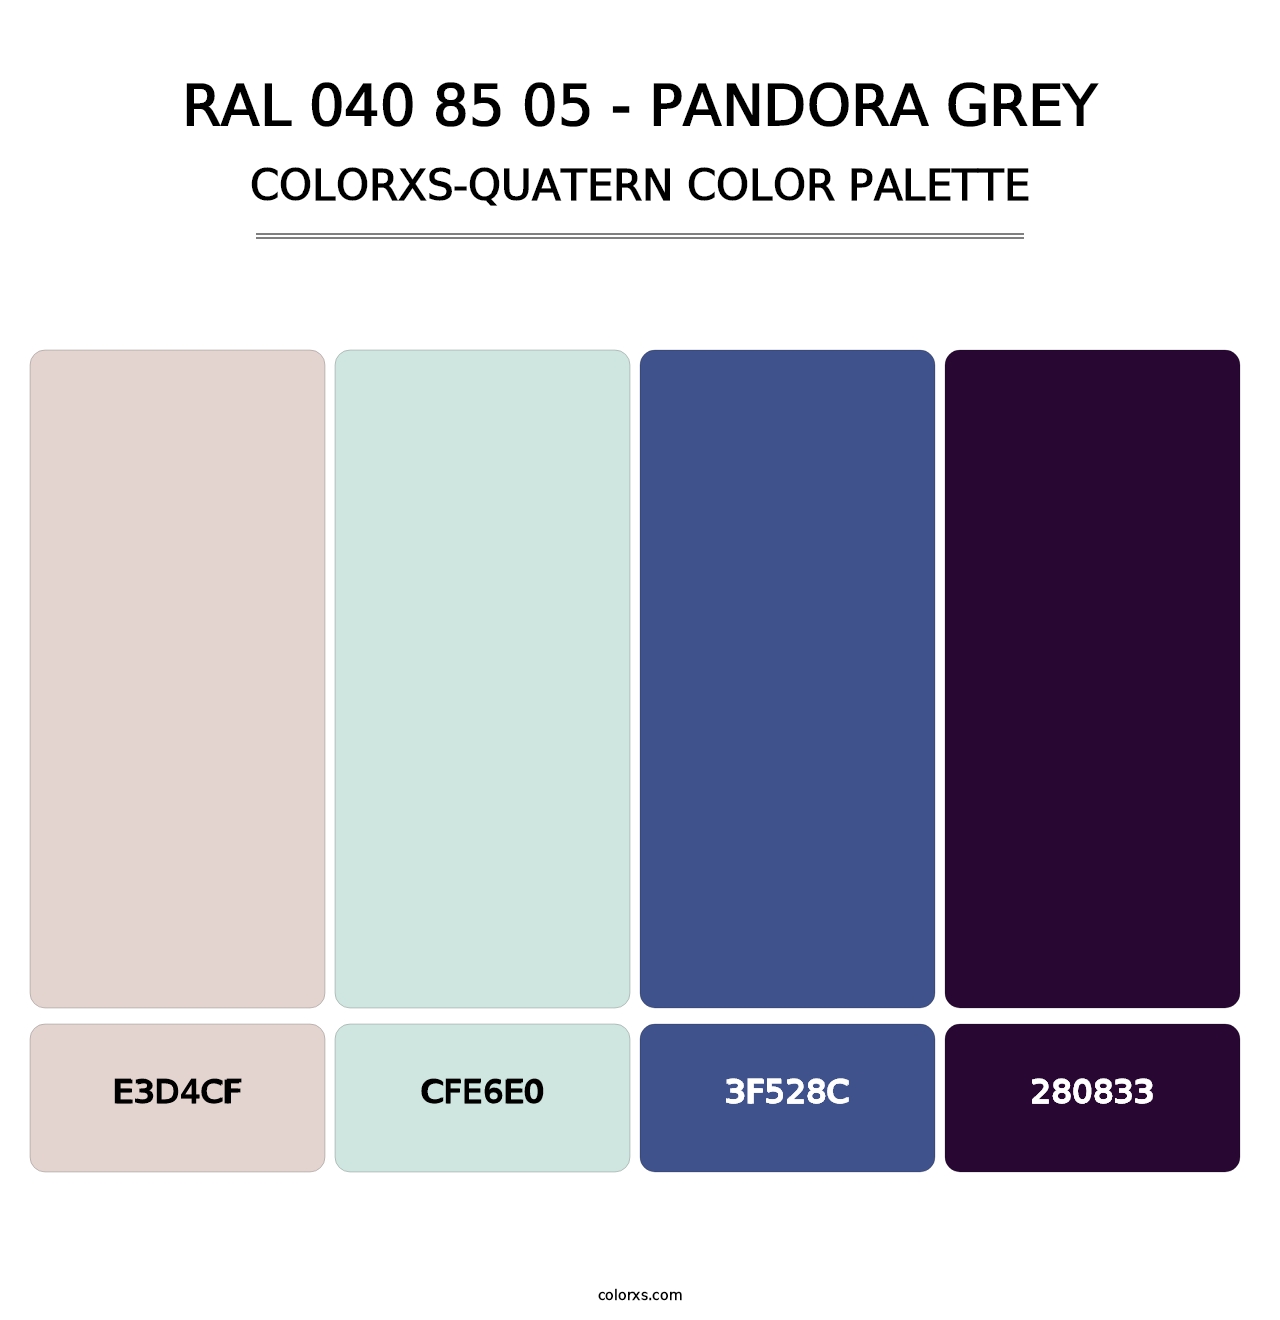 RAL 040 85 05 - Pandora Grey - Colorxs Quatern Palette